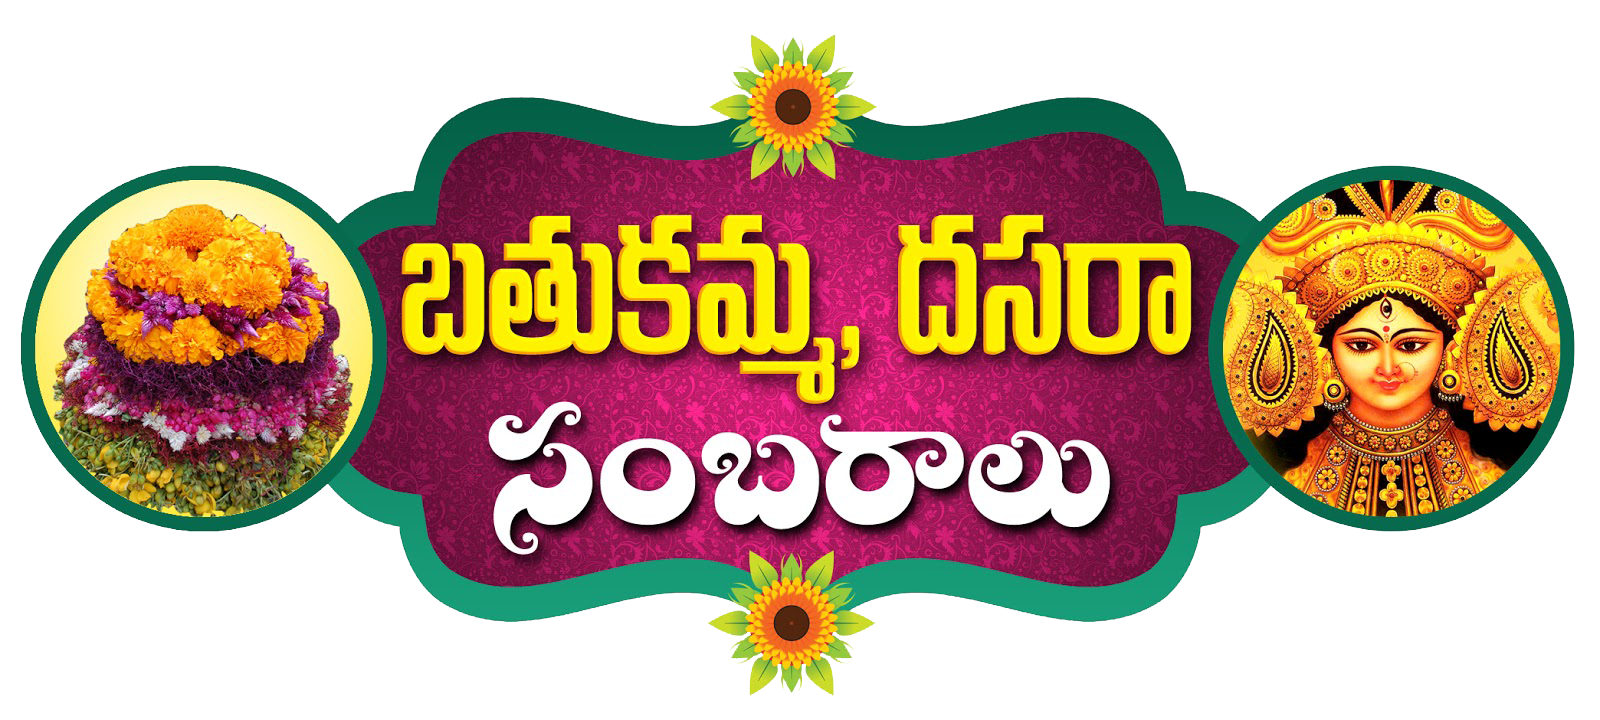 Telangana Bathukamma Product Telugu Cuisine Download HQ PNG PNG Image